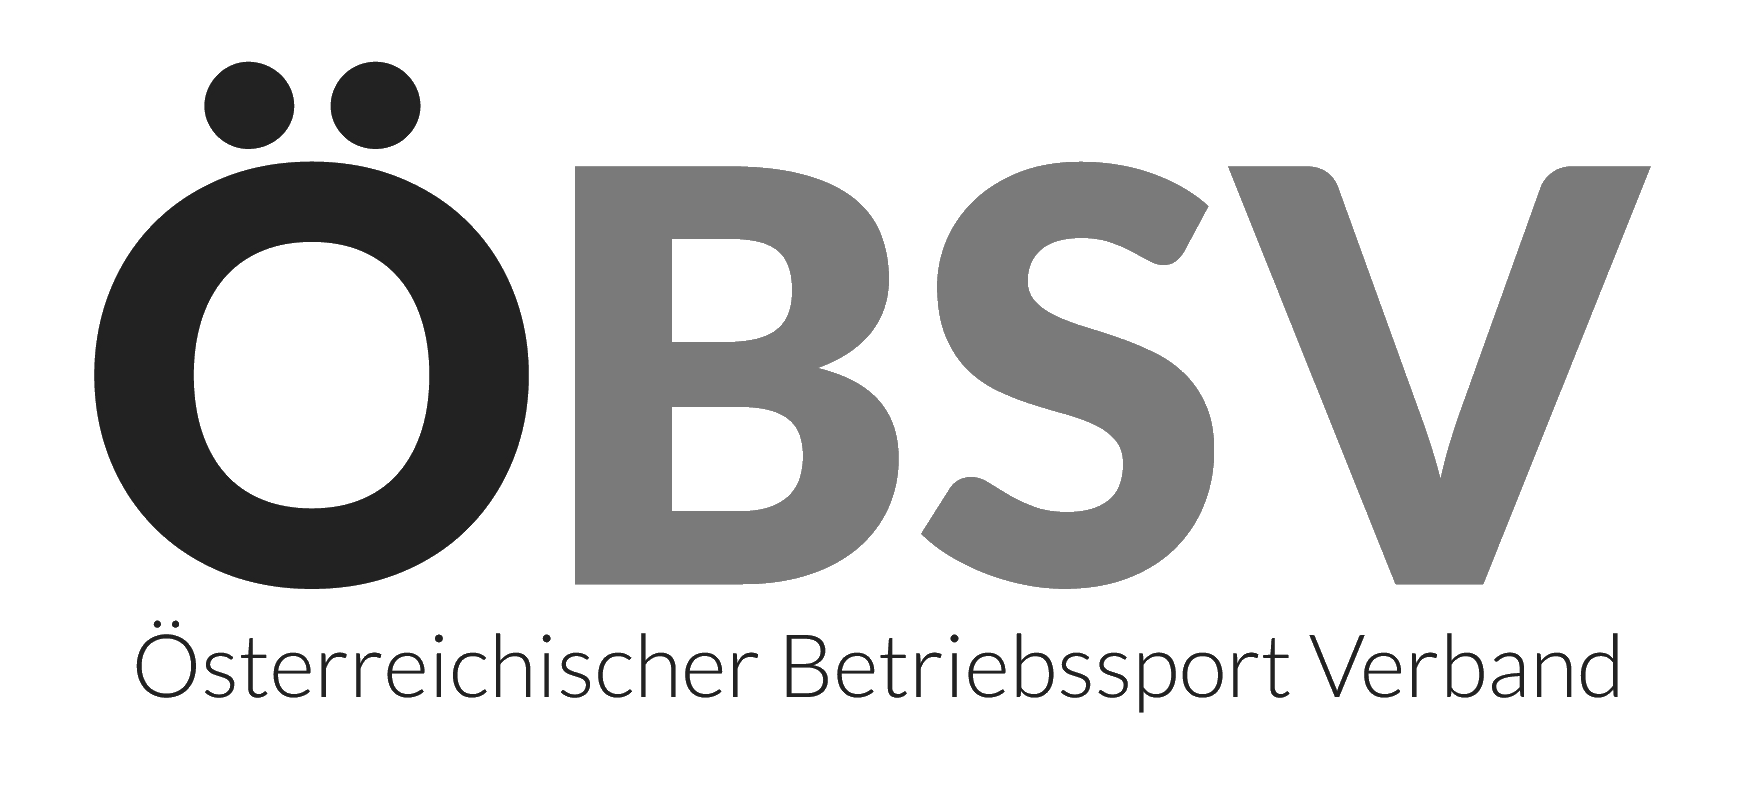 ÖBSV_logo_sw